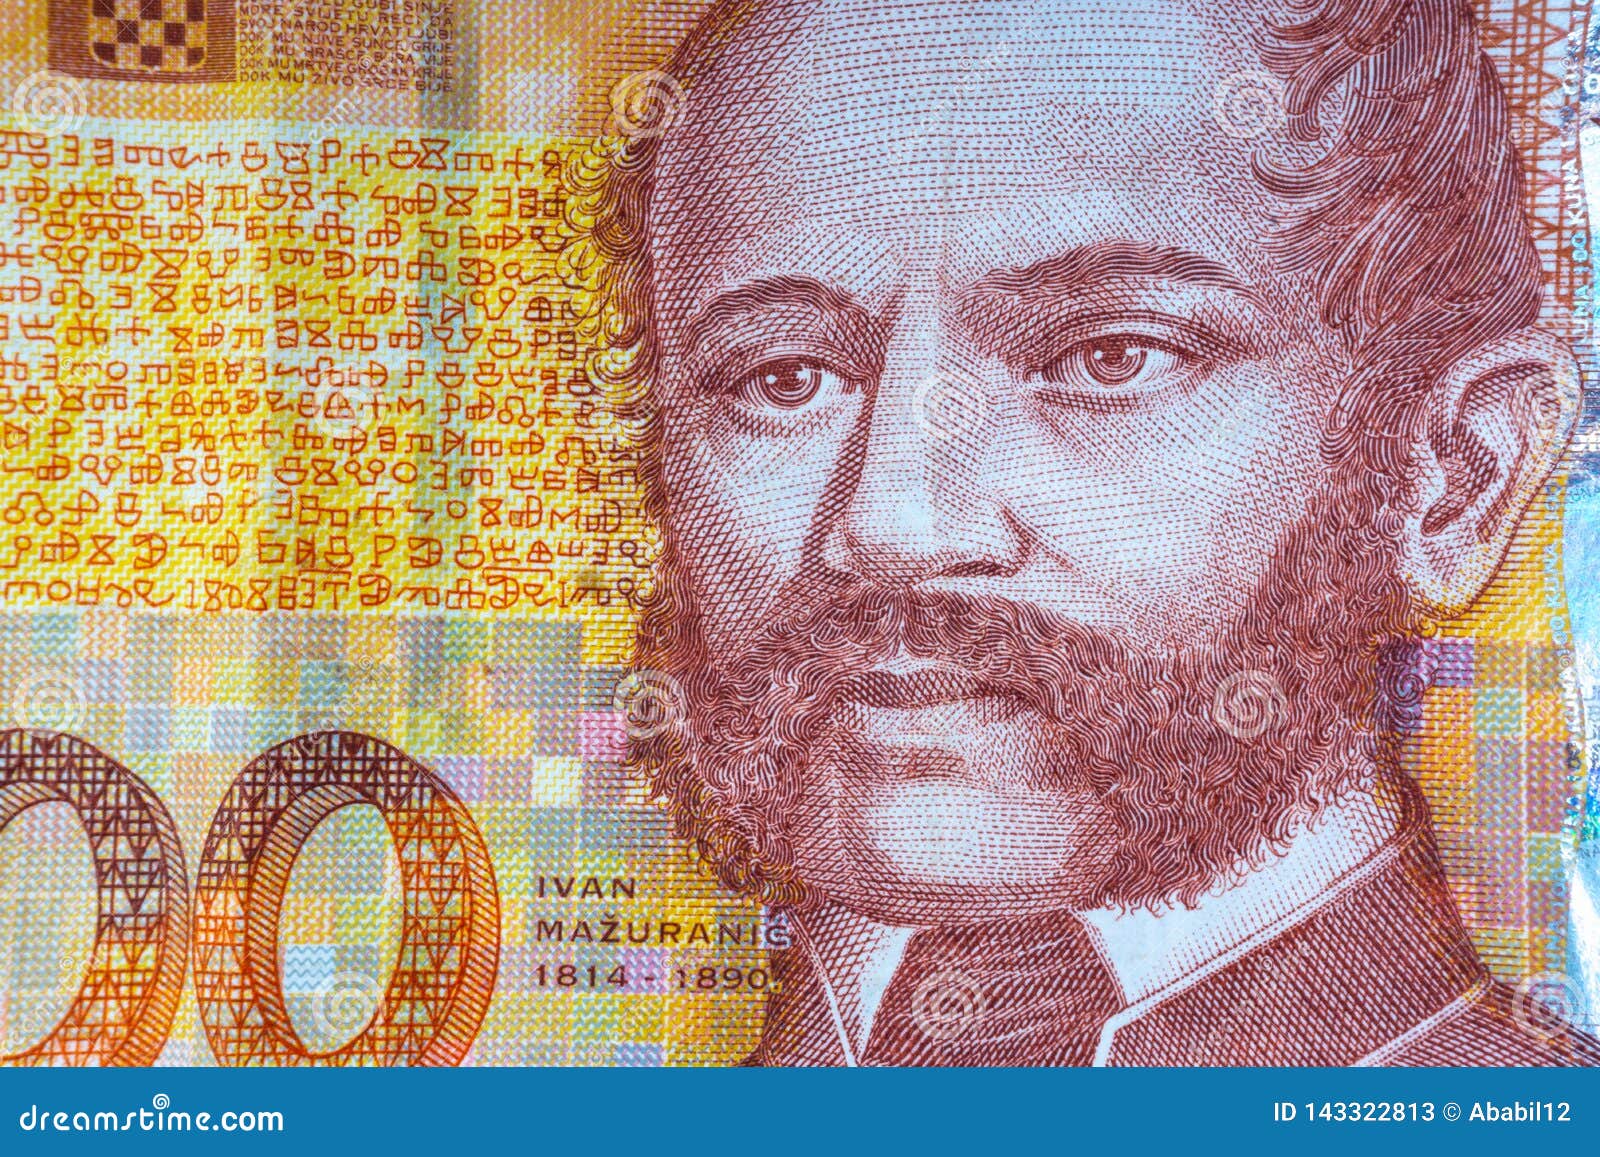 Croatian KUNA or STO KUNA Money Currency Closeup Stock Image - Image of ...